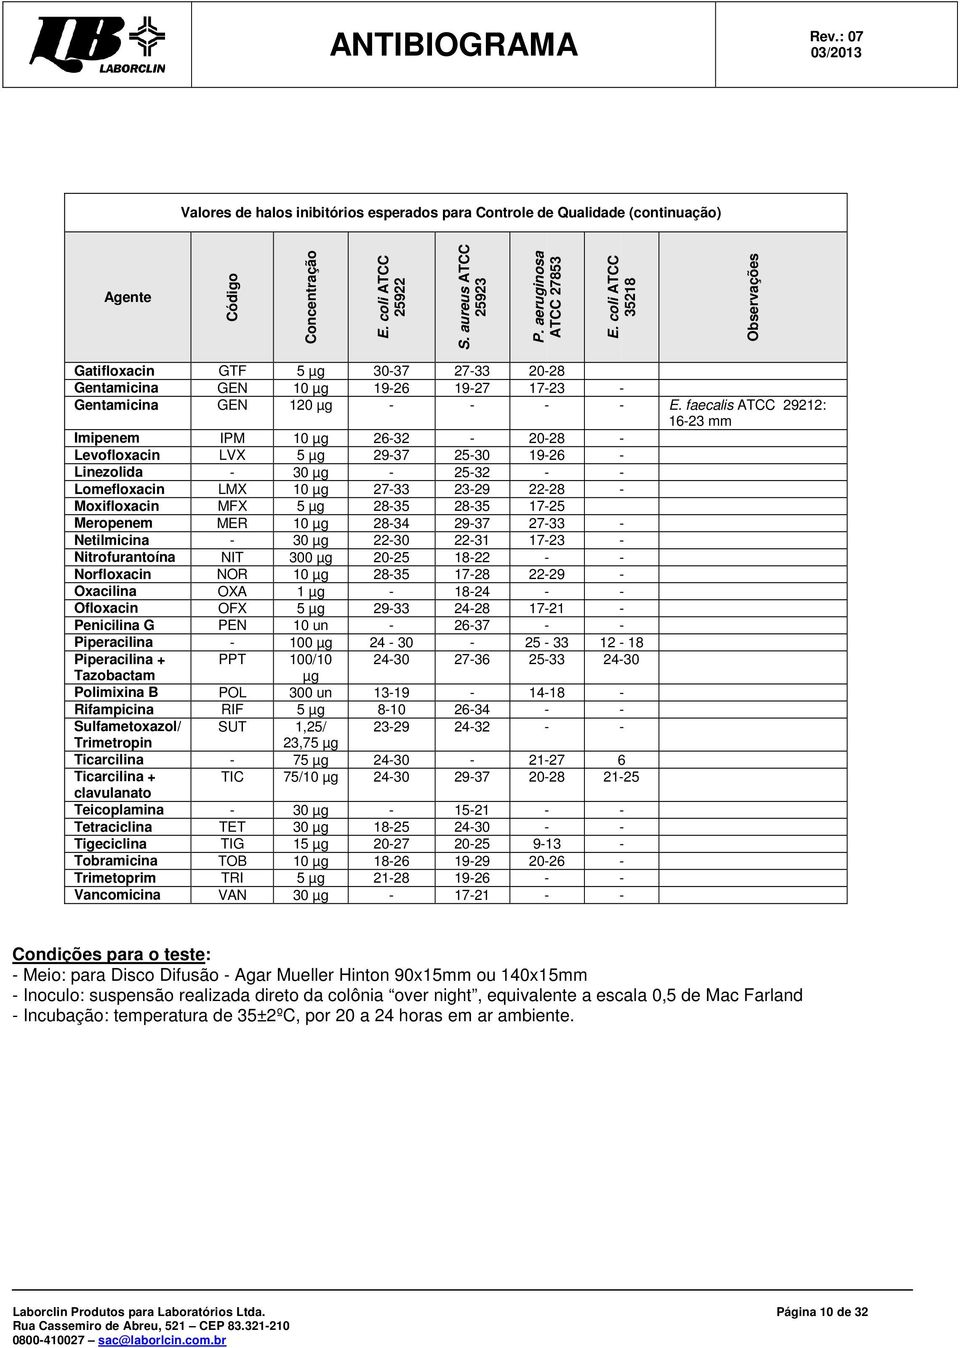 faecalis ATCC 29212: 16-23 mm Imipenem IPM 10 µg 26-32 - 20-28 - Levofloxacin LVX 5 µg 29-37 25-30 19-26 - Linezolida - 30 µg - 25-32 - - Lomefloxacin LMX 10 µg 27-33 23-29 22-28 - Moxifloxacin MFX 5